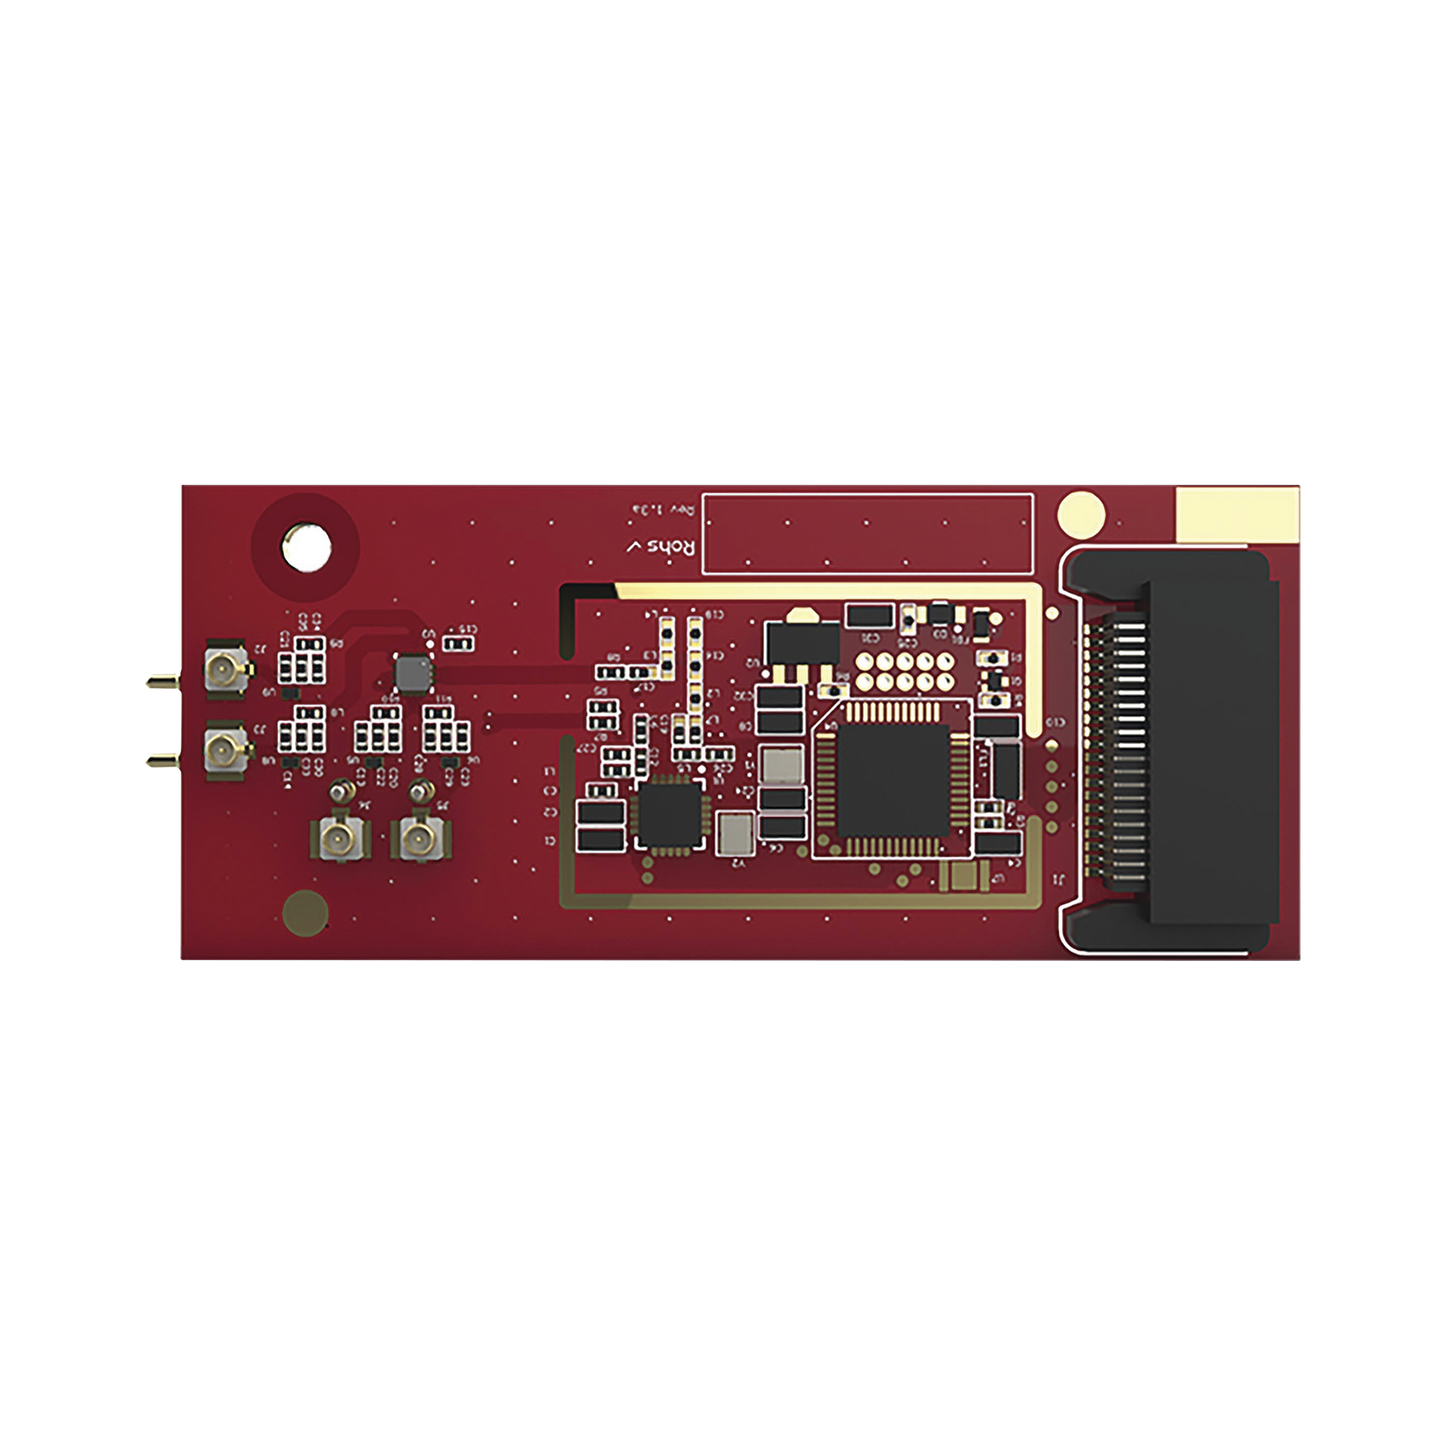 Modulo PROTAKEOVER compatible con Panel ProSeries para recibir Sensores Inalámbricos de la serie 5800, Bosch, 2GiG, ITI/Qolsis y DSC